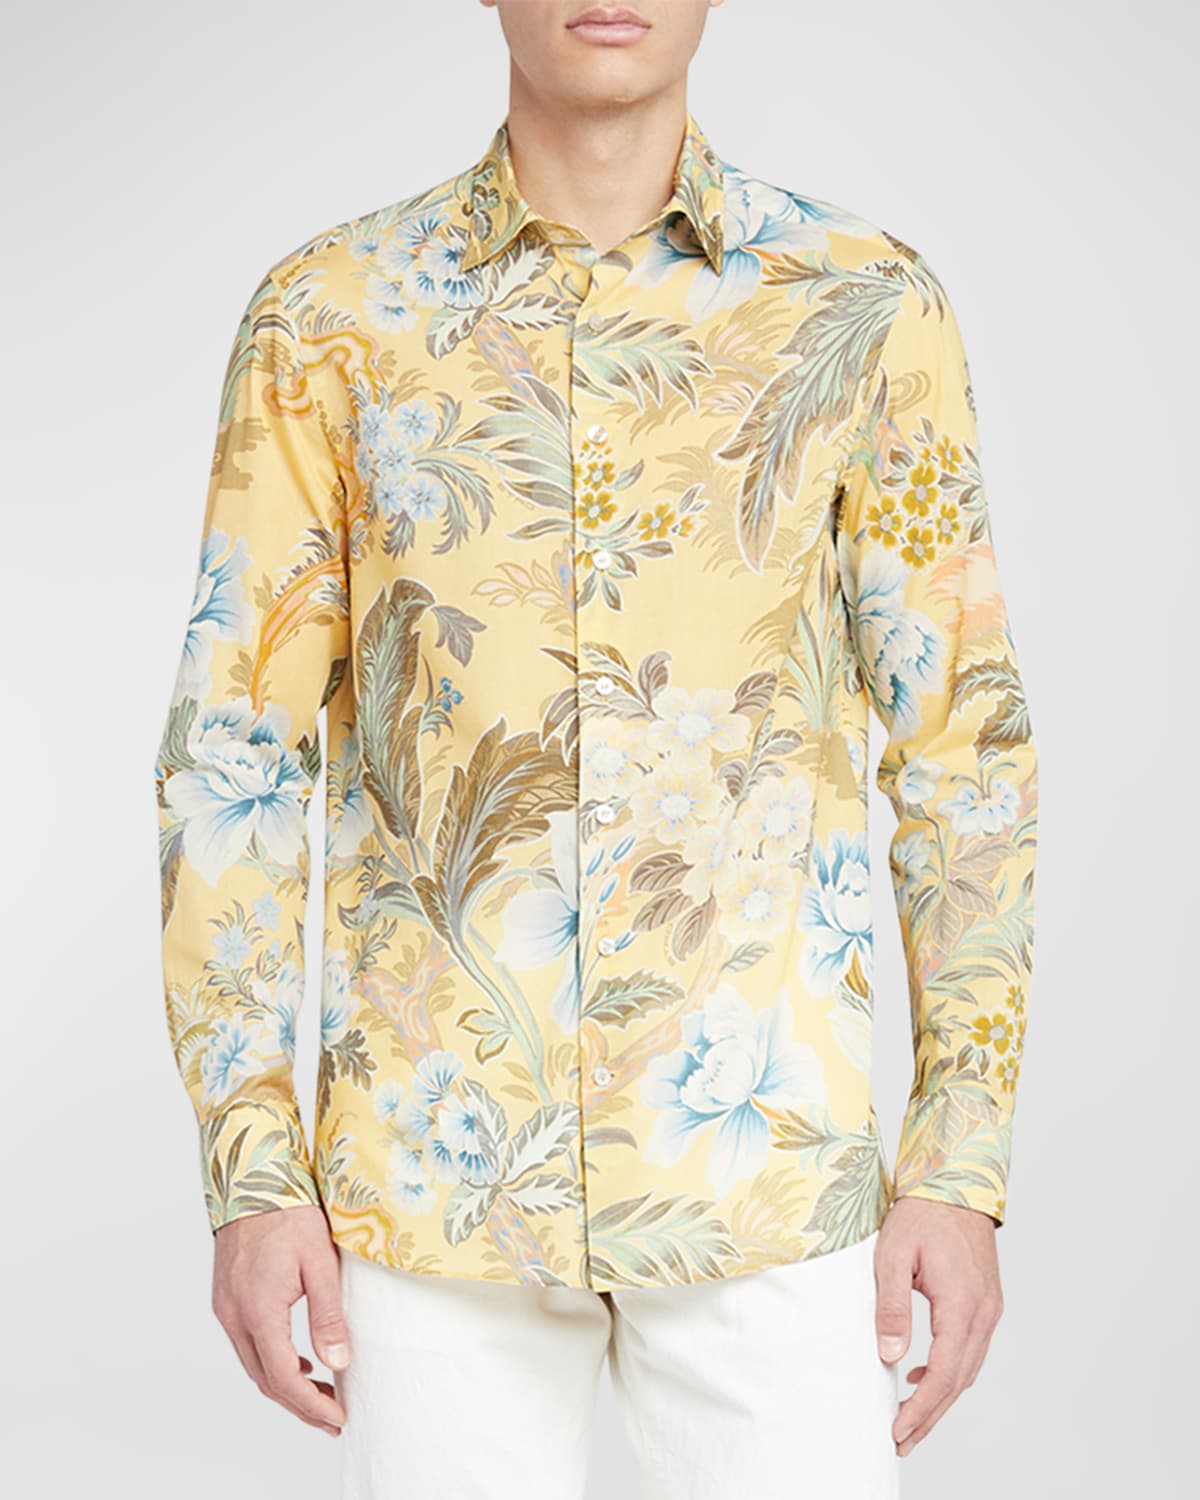 Etro Men's Floral Print Dress Shirt In Print On Yellow Base